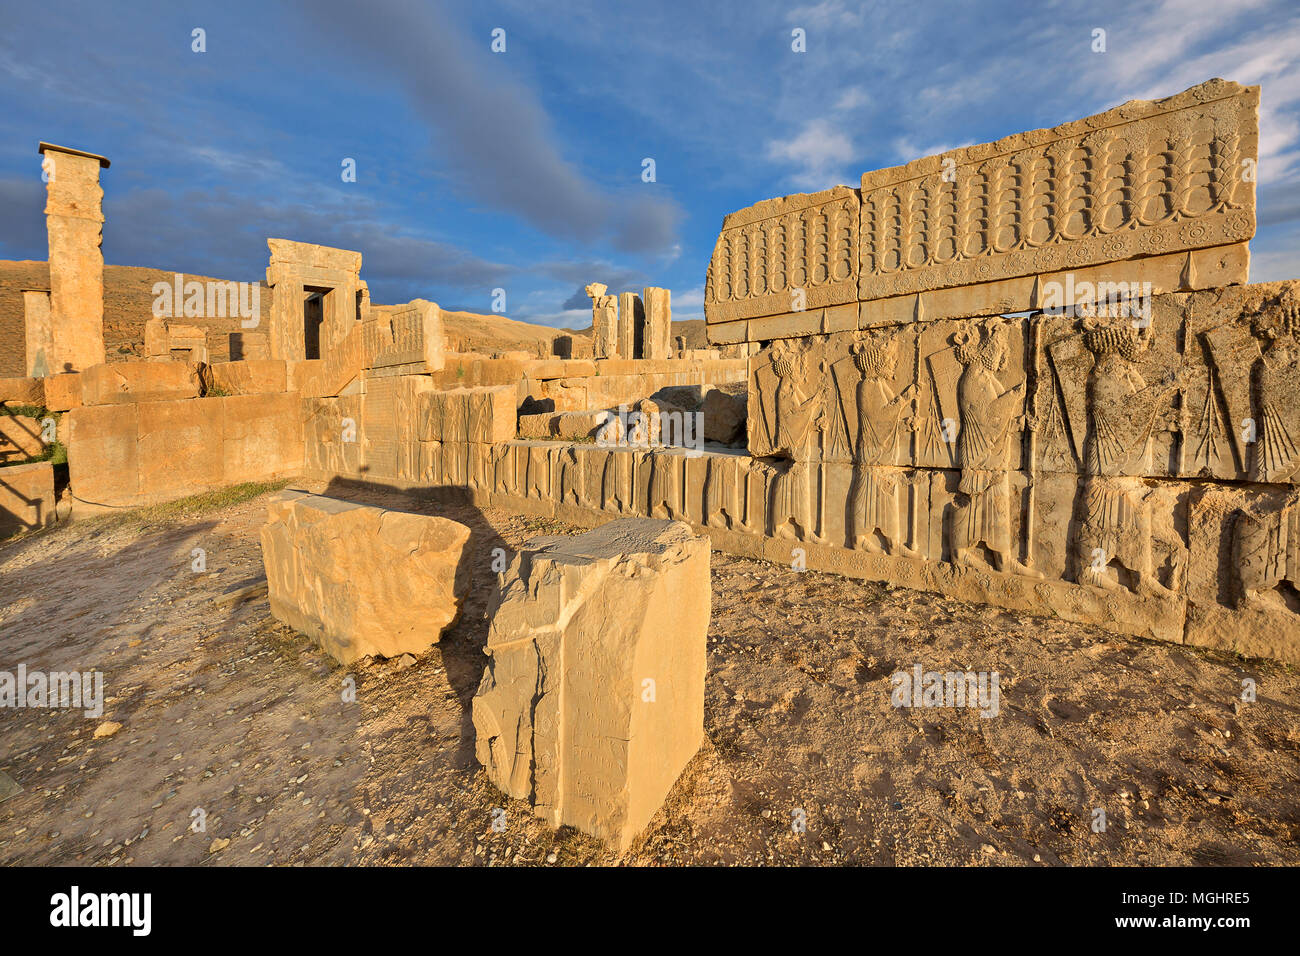 Sitio persa de Persépolis, en Irán, en el atardecer. Foto de stock